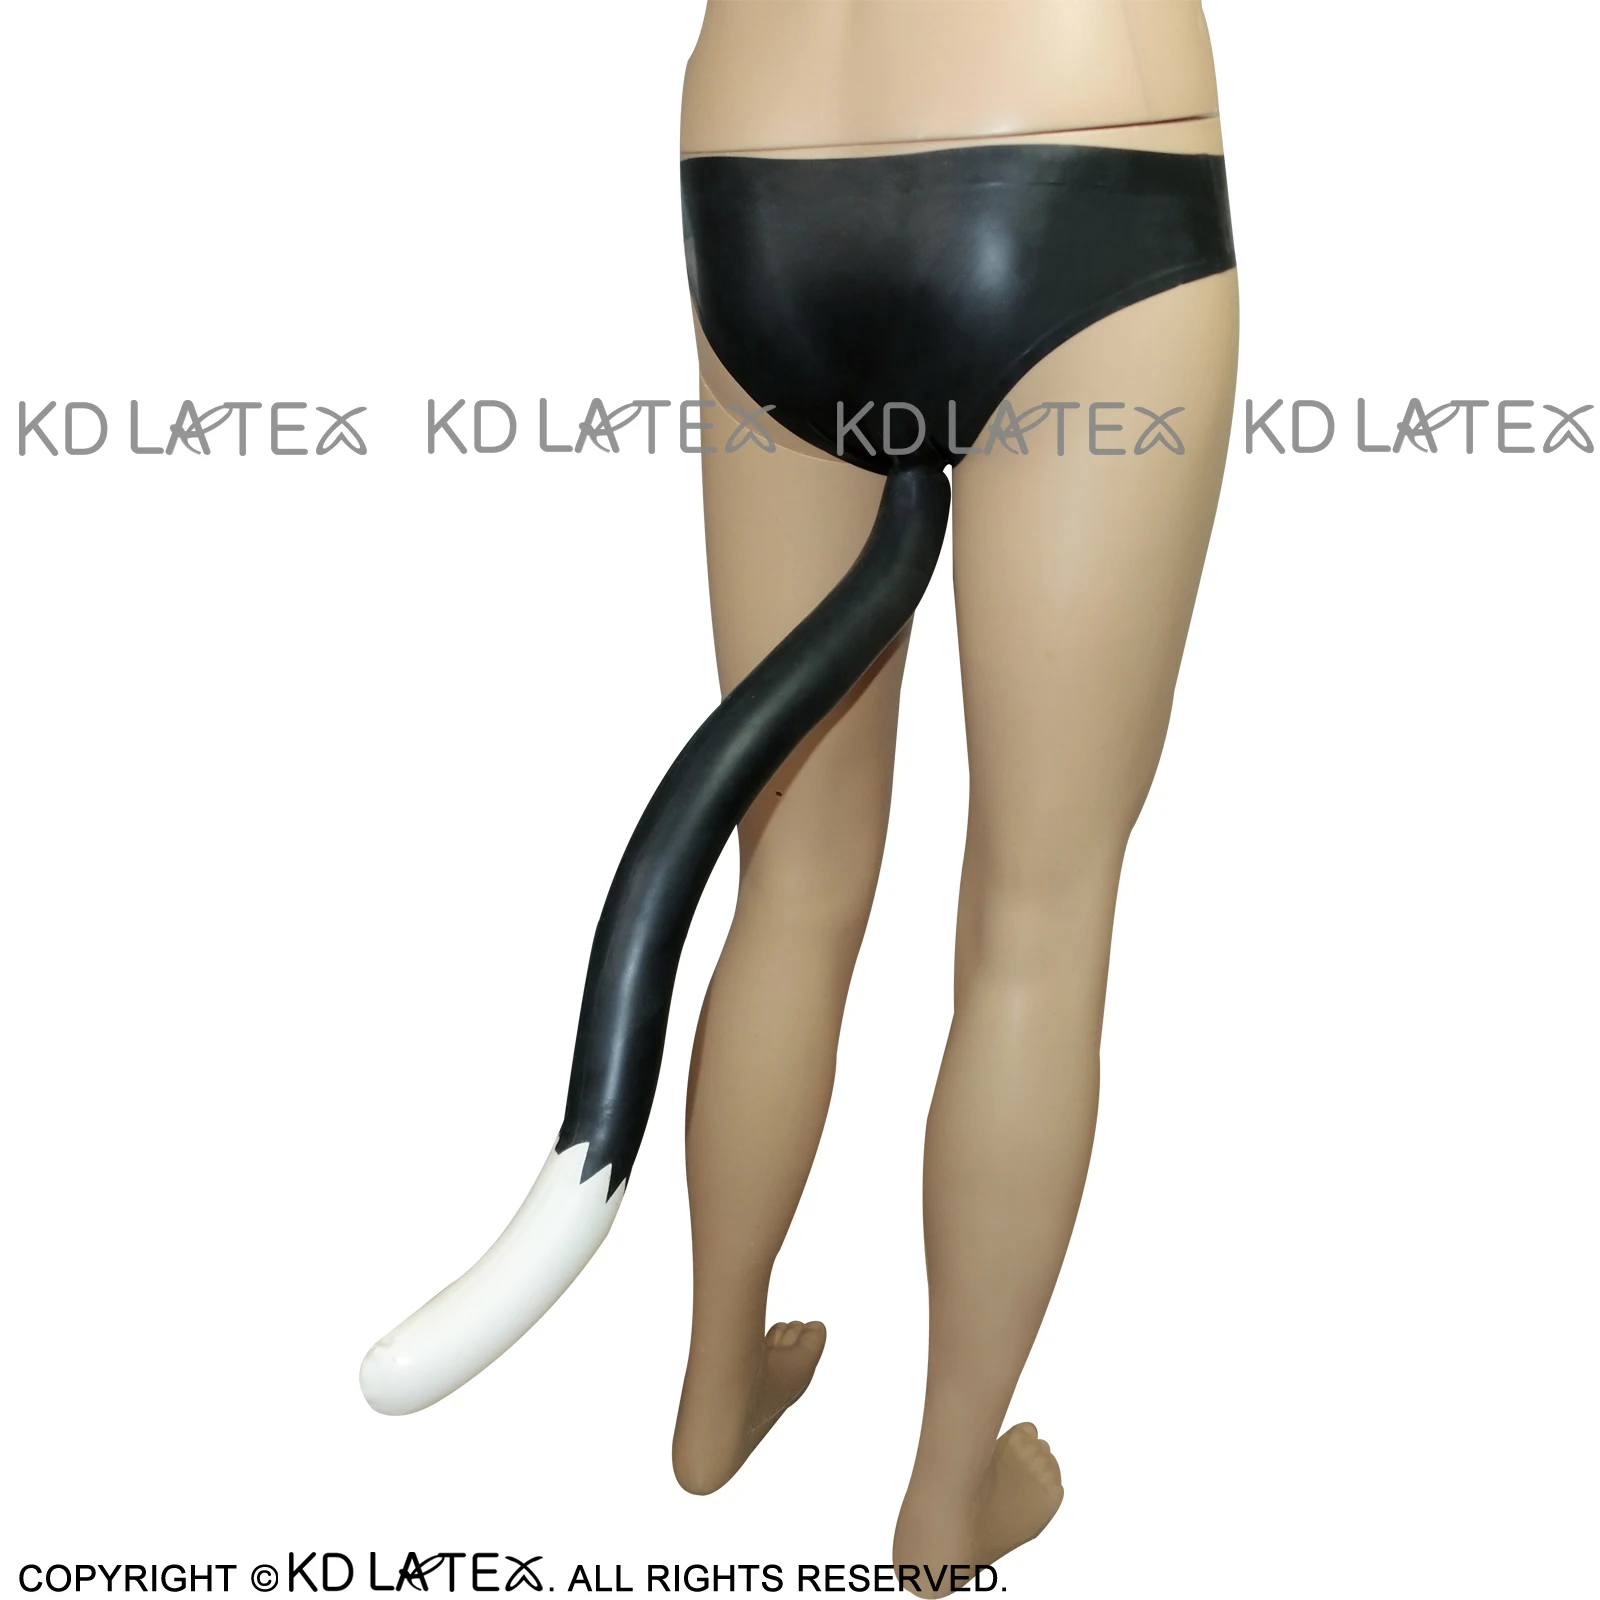 Men's latexlatex men's shorts rubber underwear exotic panties see